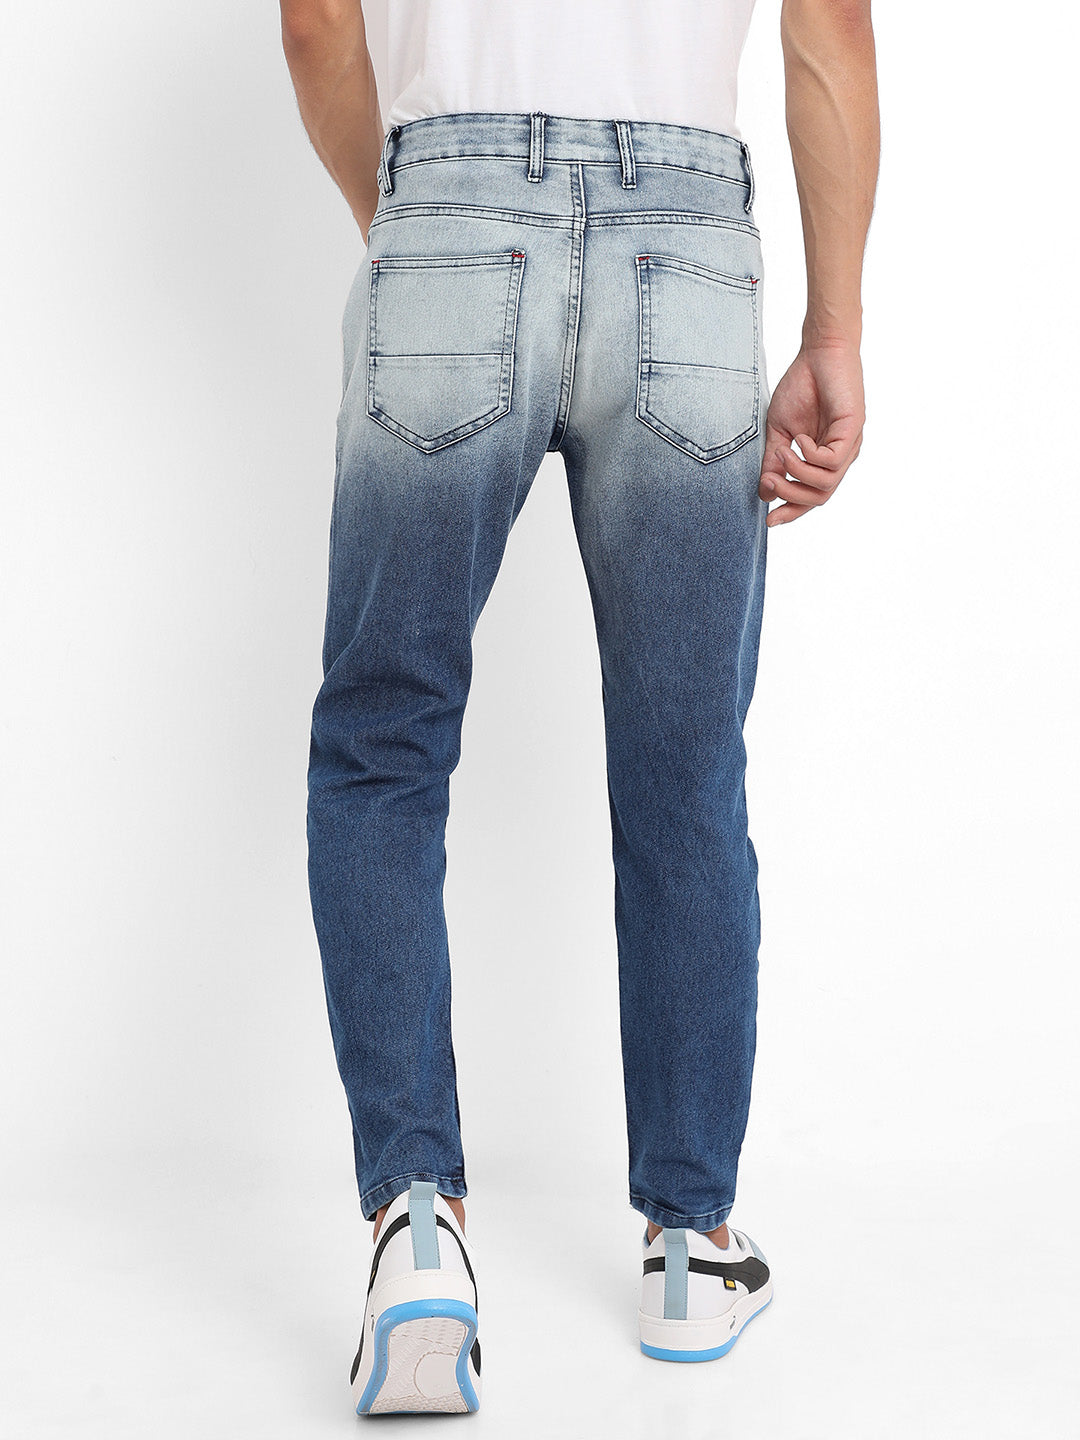 Contrast Ombre Denim Jeans